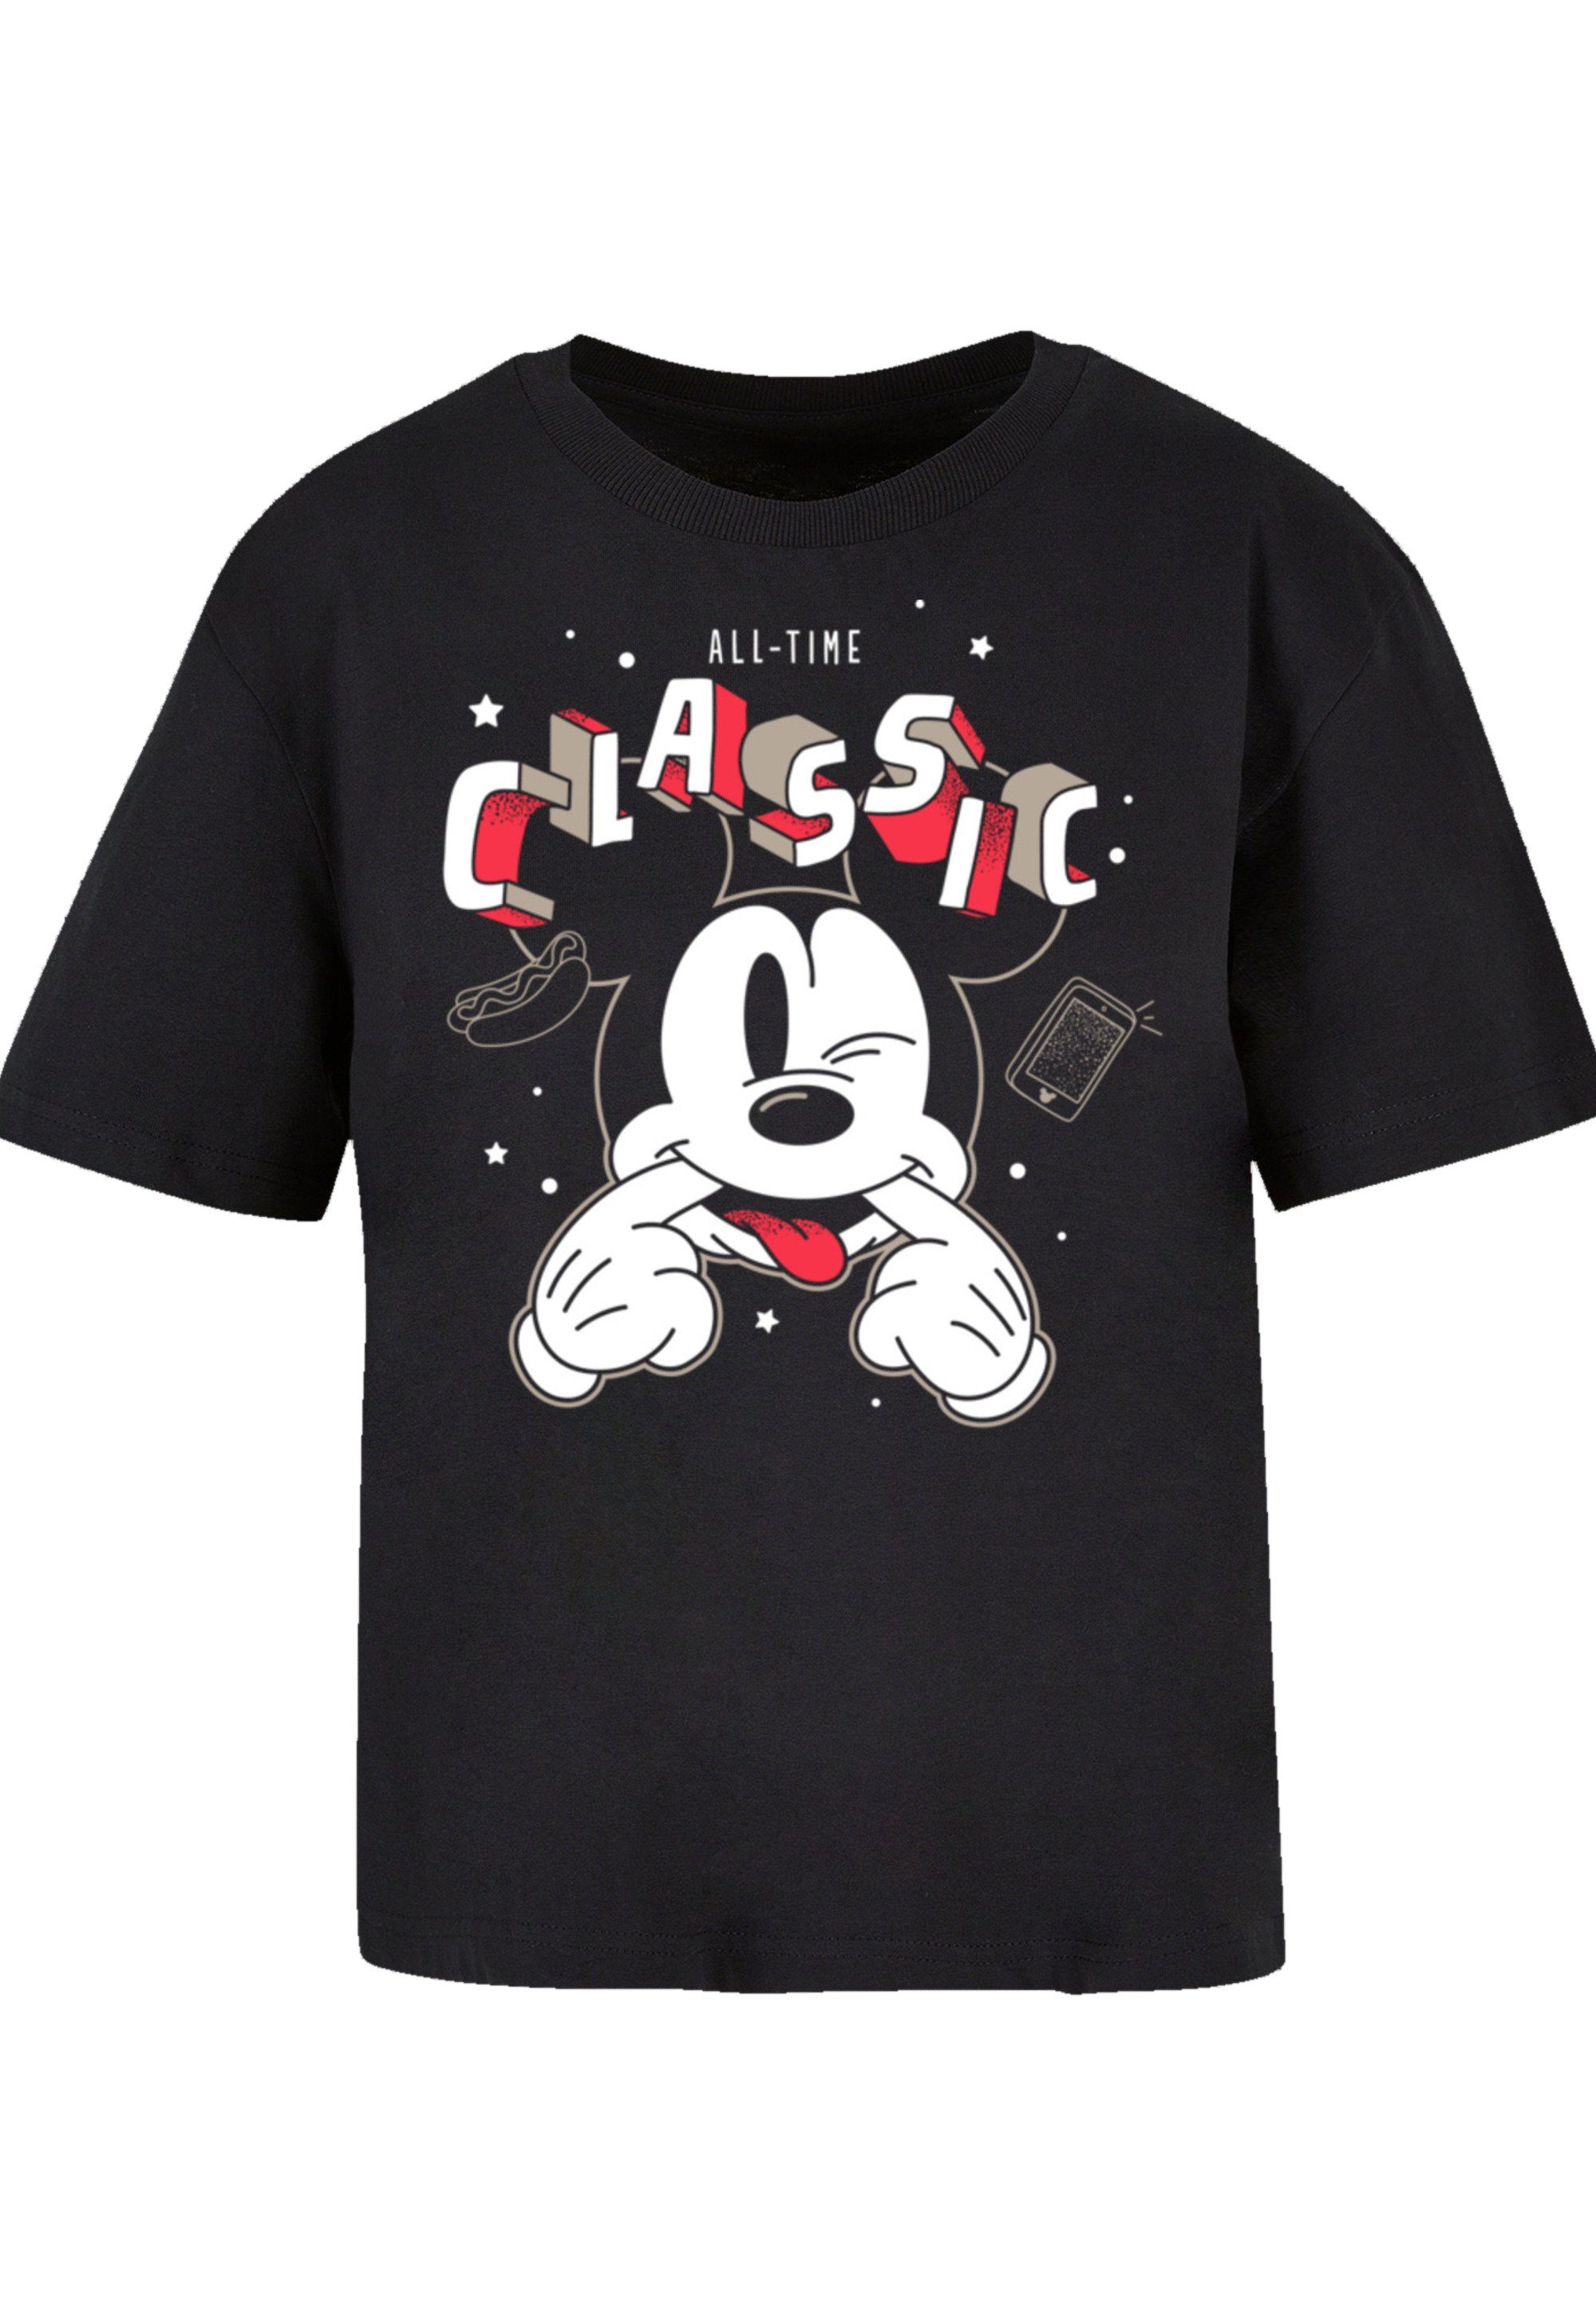 Time und Premium T-Shirt F4NT4STIC Komfortabel All vielseitig kombinierbar Qualität, Classic Maus Disney Micky